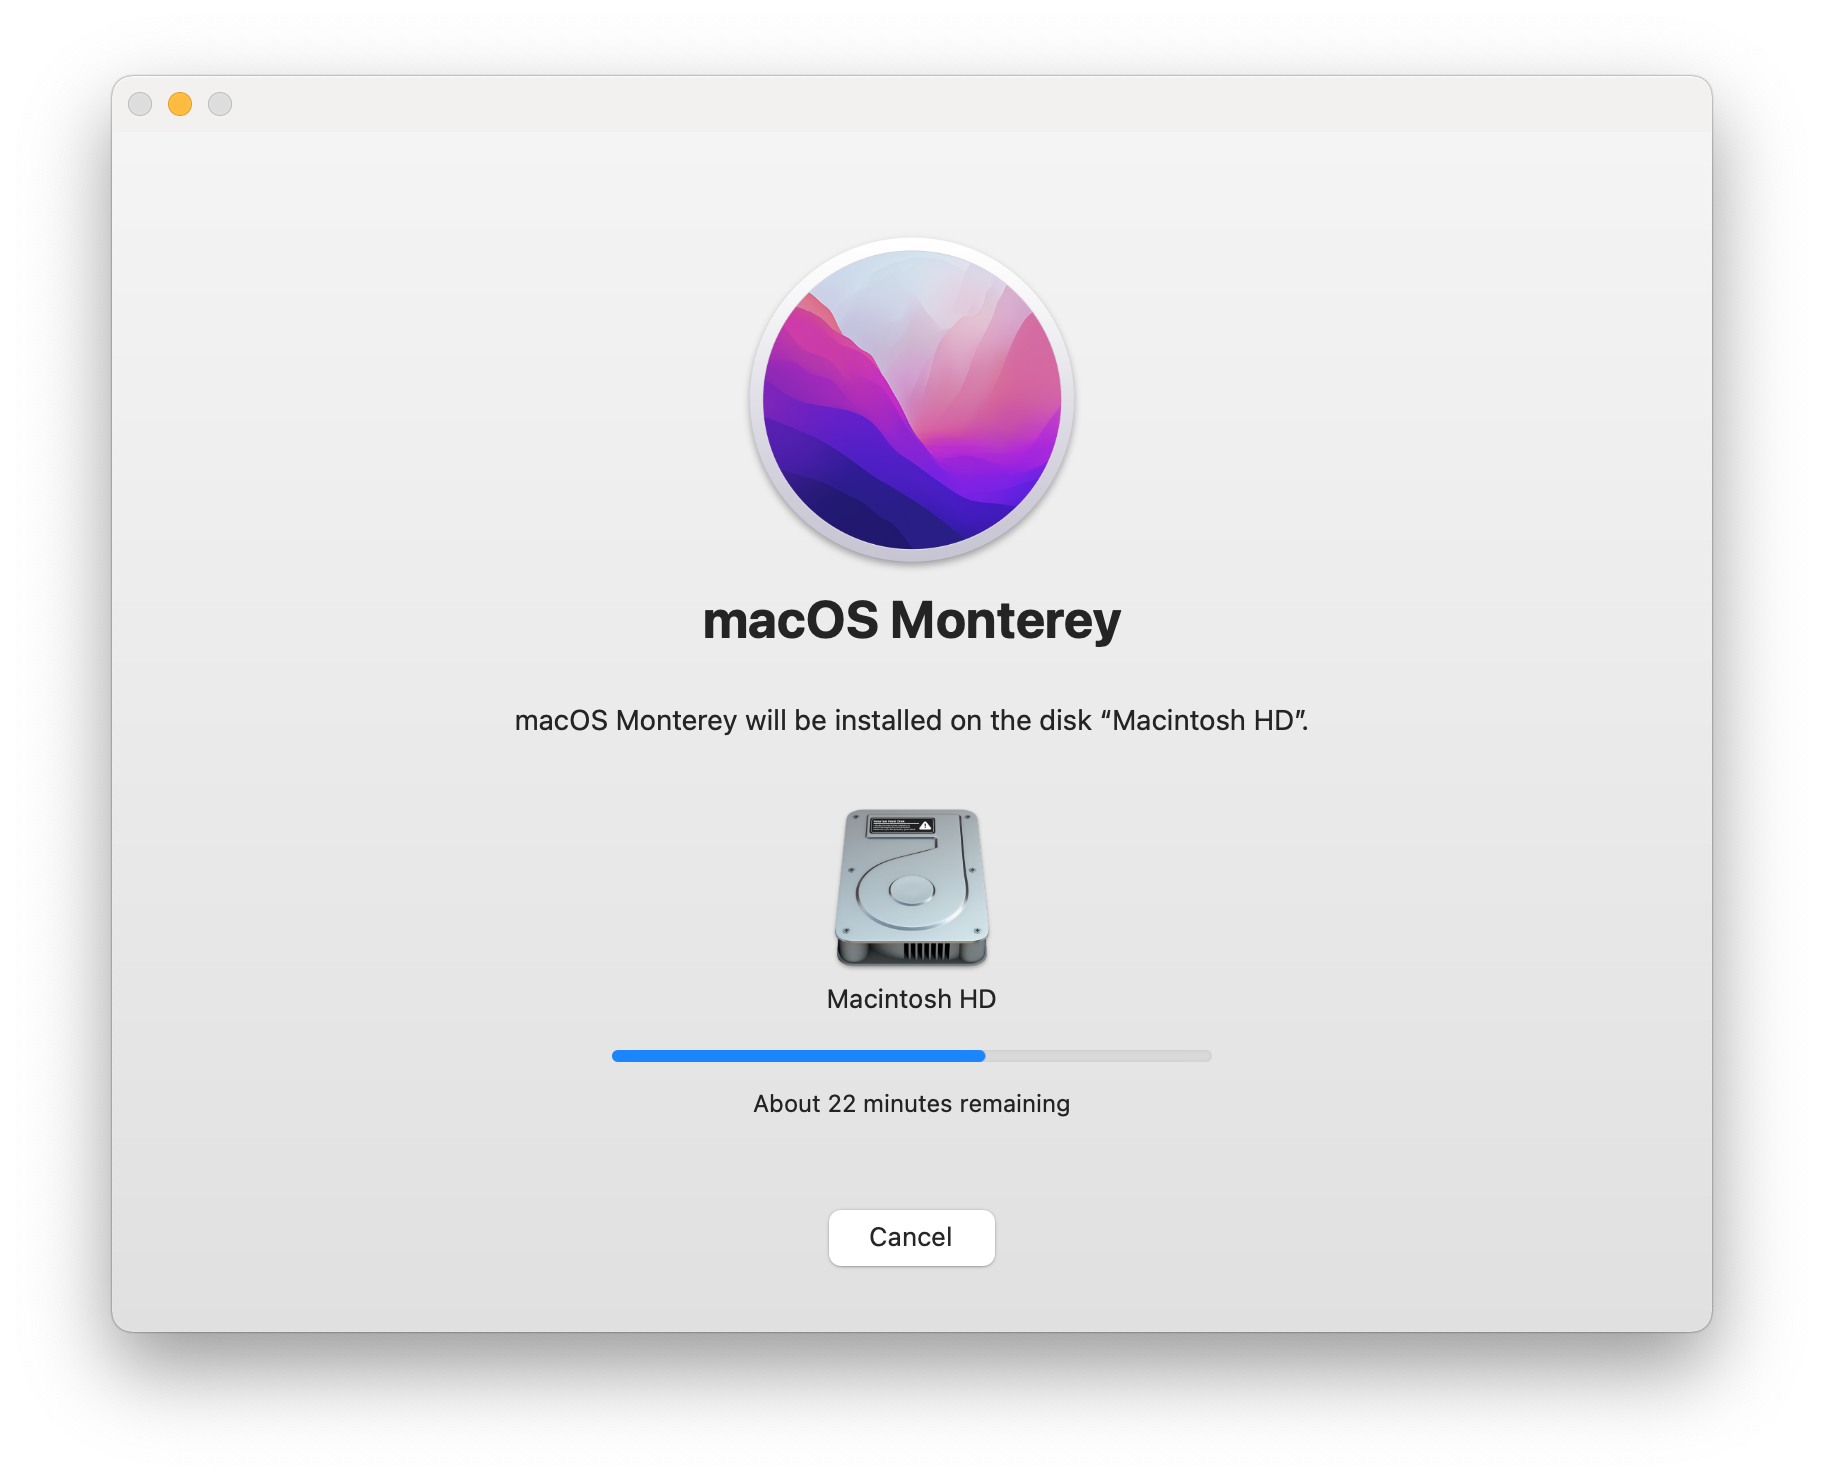 installing macOS Monterey on Macintosh HD